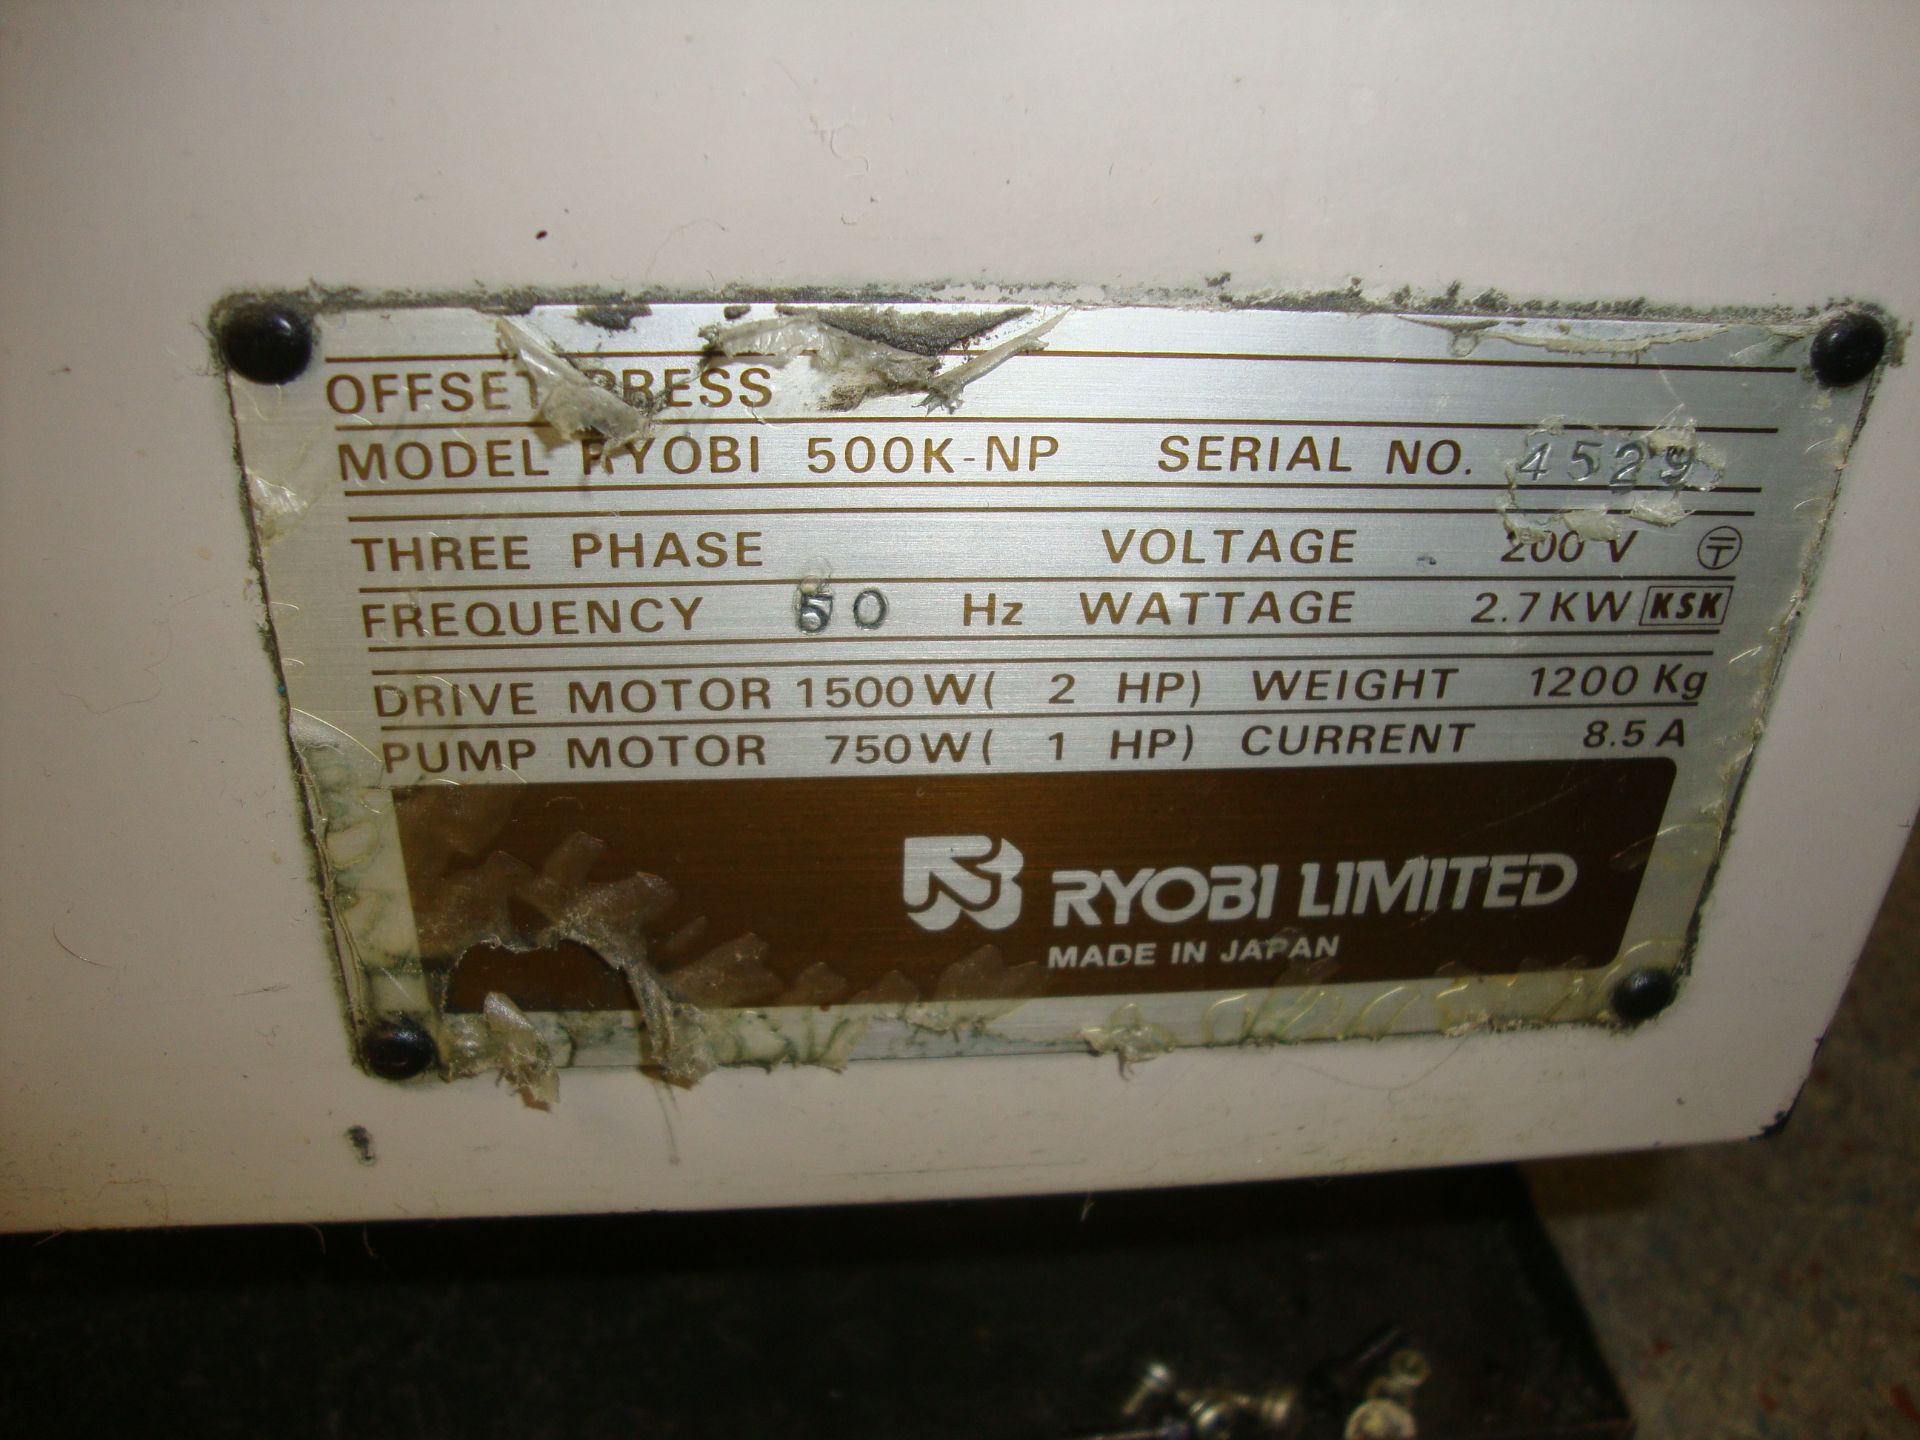 Ryobi 500K-NP offset press - Image 5 of 11